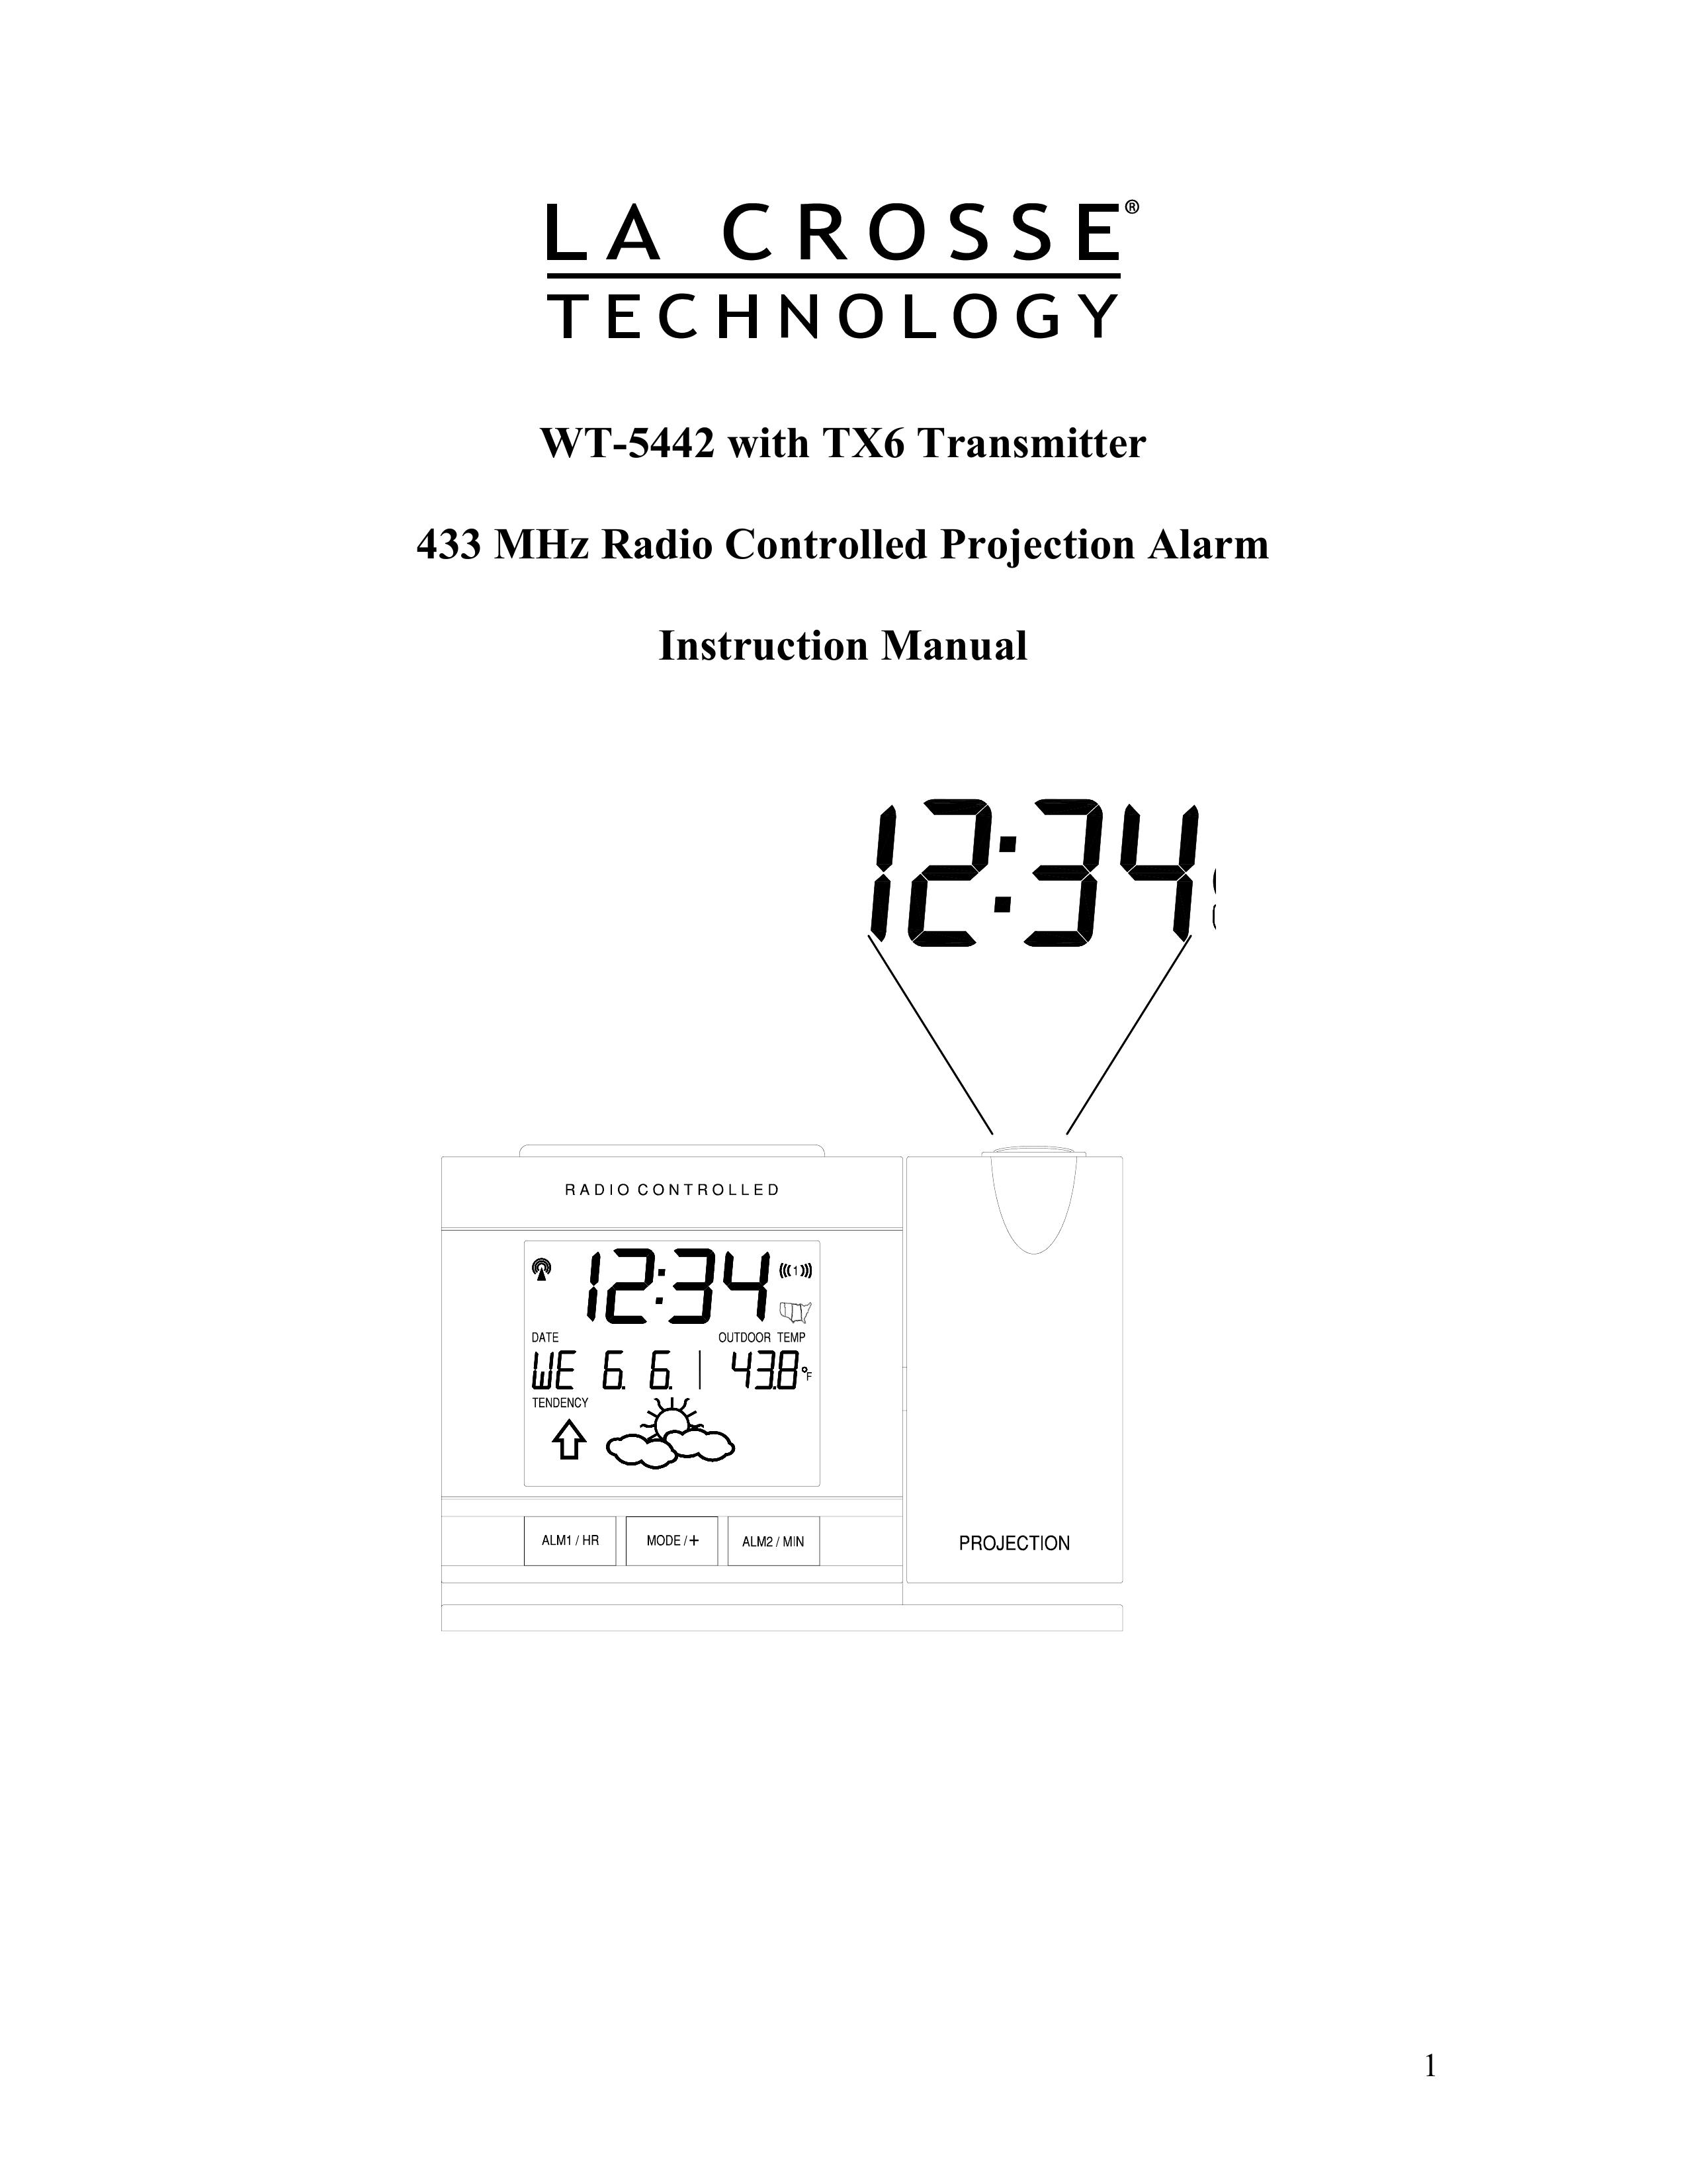 La Crosse Technology WT-5442 Clock Radio User Manual